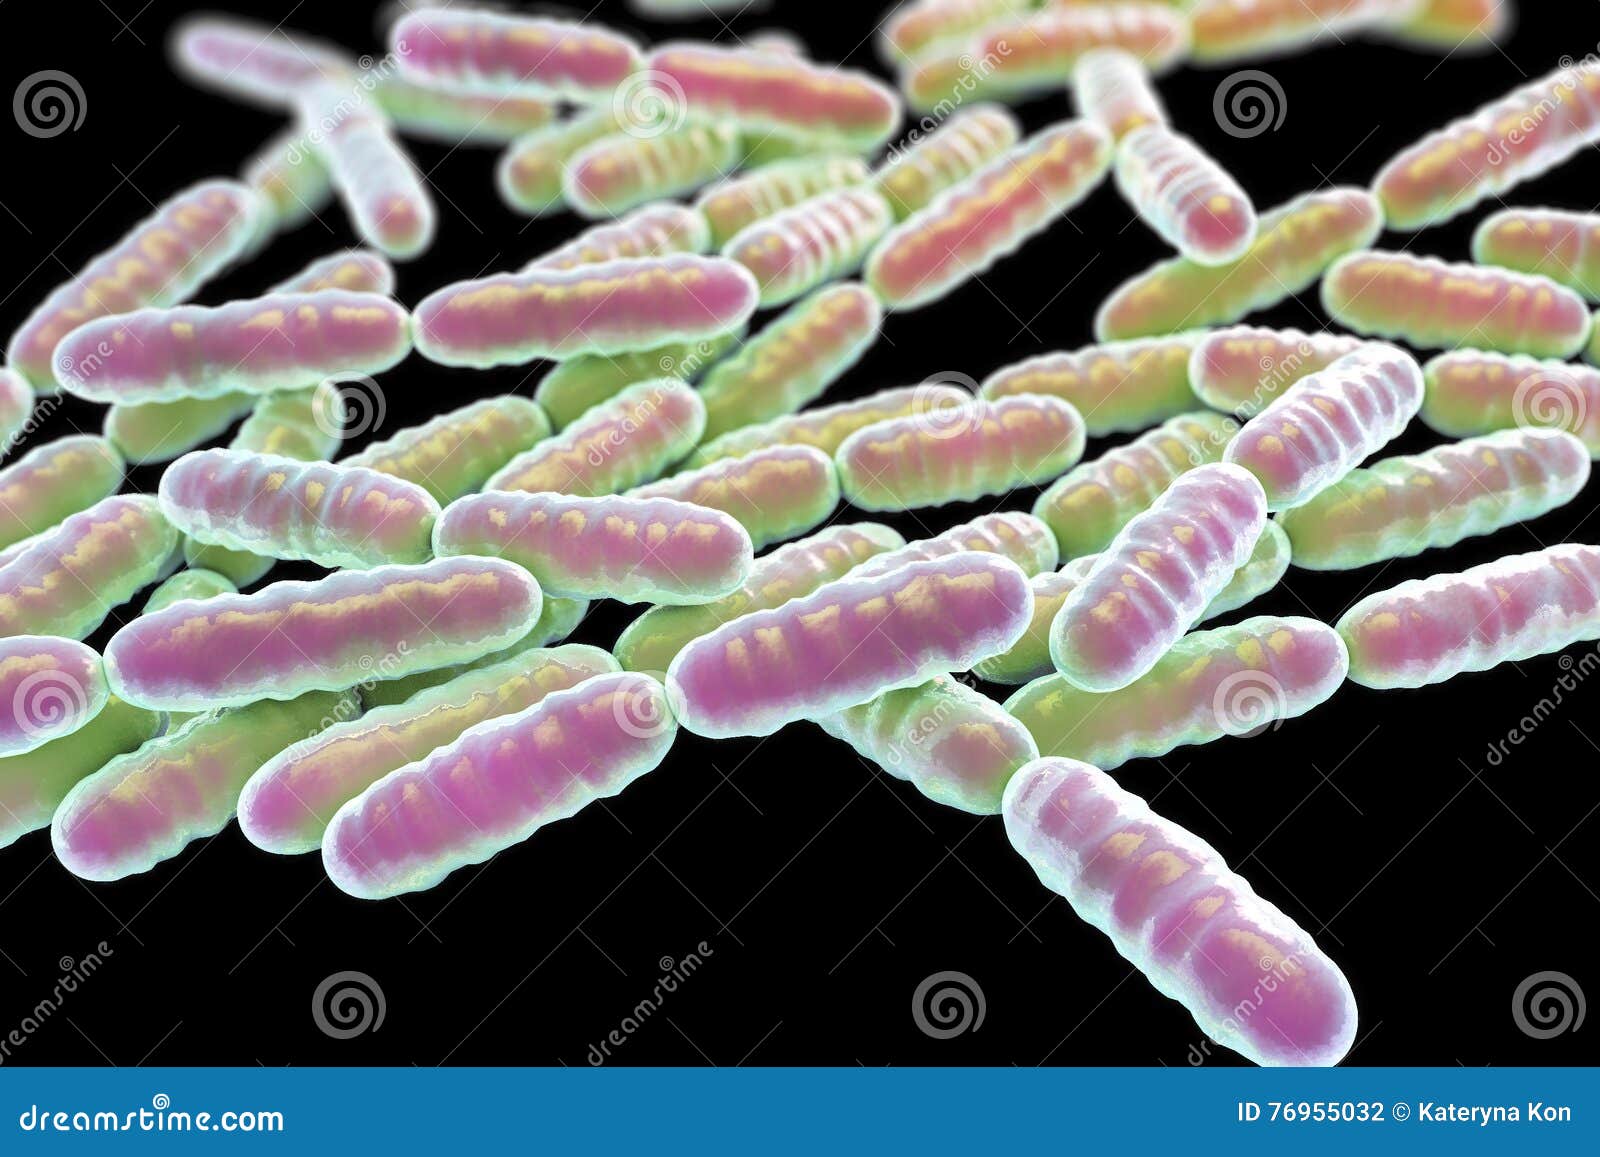 probiotic bacteria lactobacillus